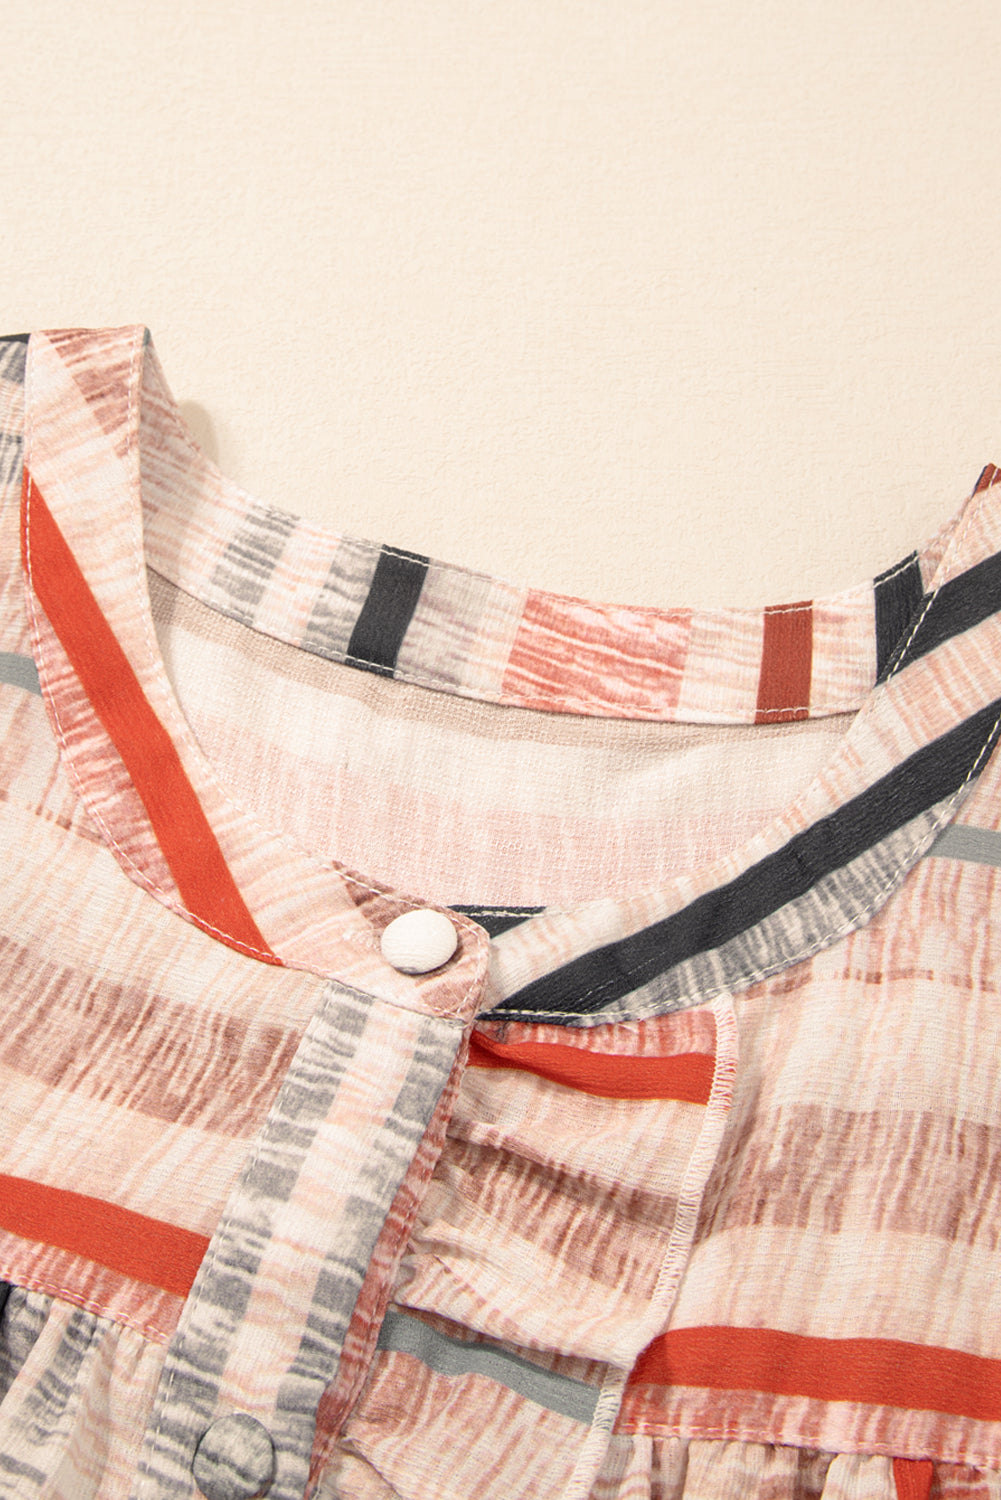 Khaki Stripe Multicolor Frilled Short Sleeve Shirt